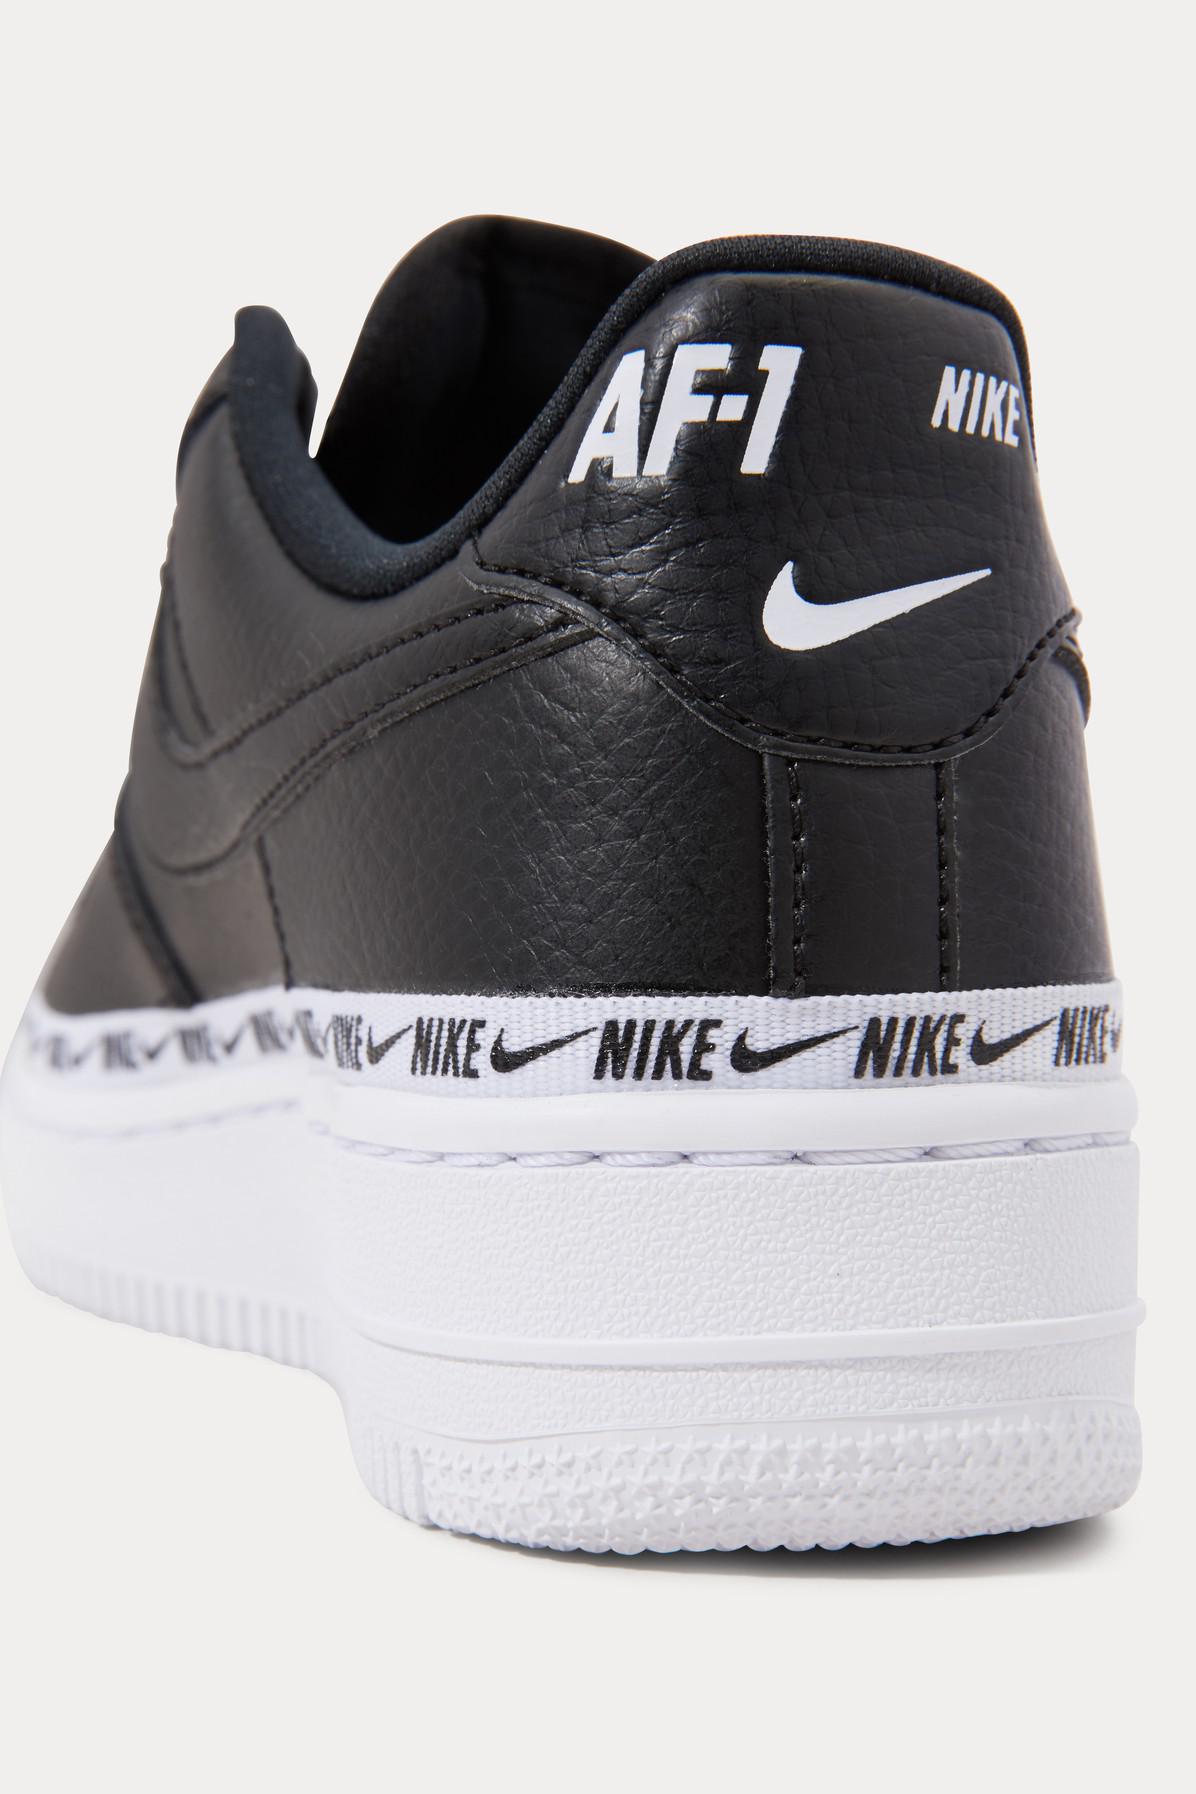 Nike Air Force 1 07 Se Prm Sneakers in Black/Black-White (Black) - Lyst